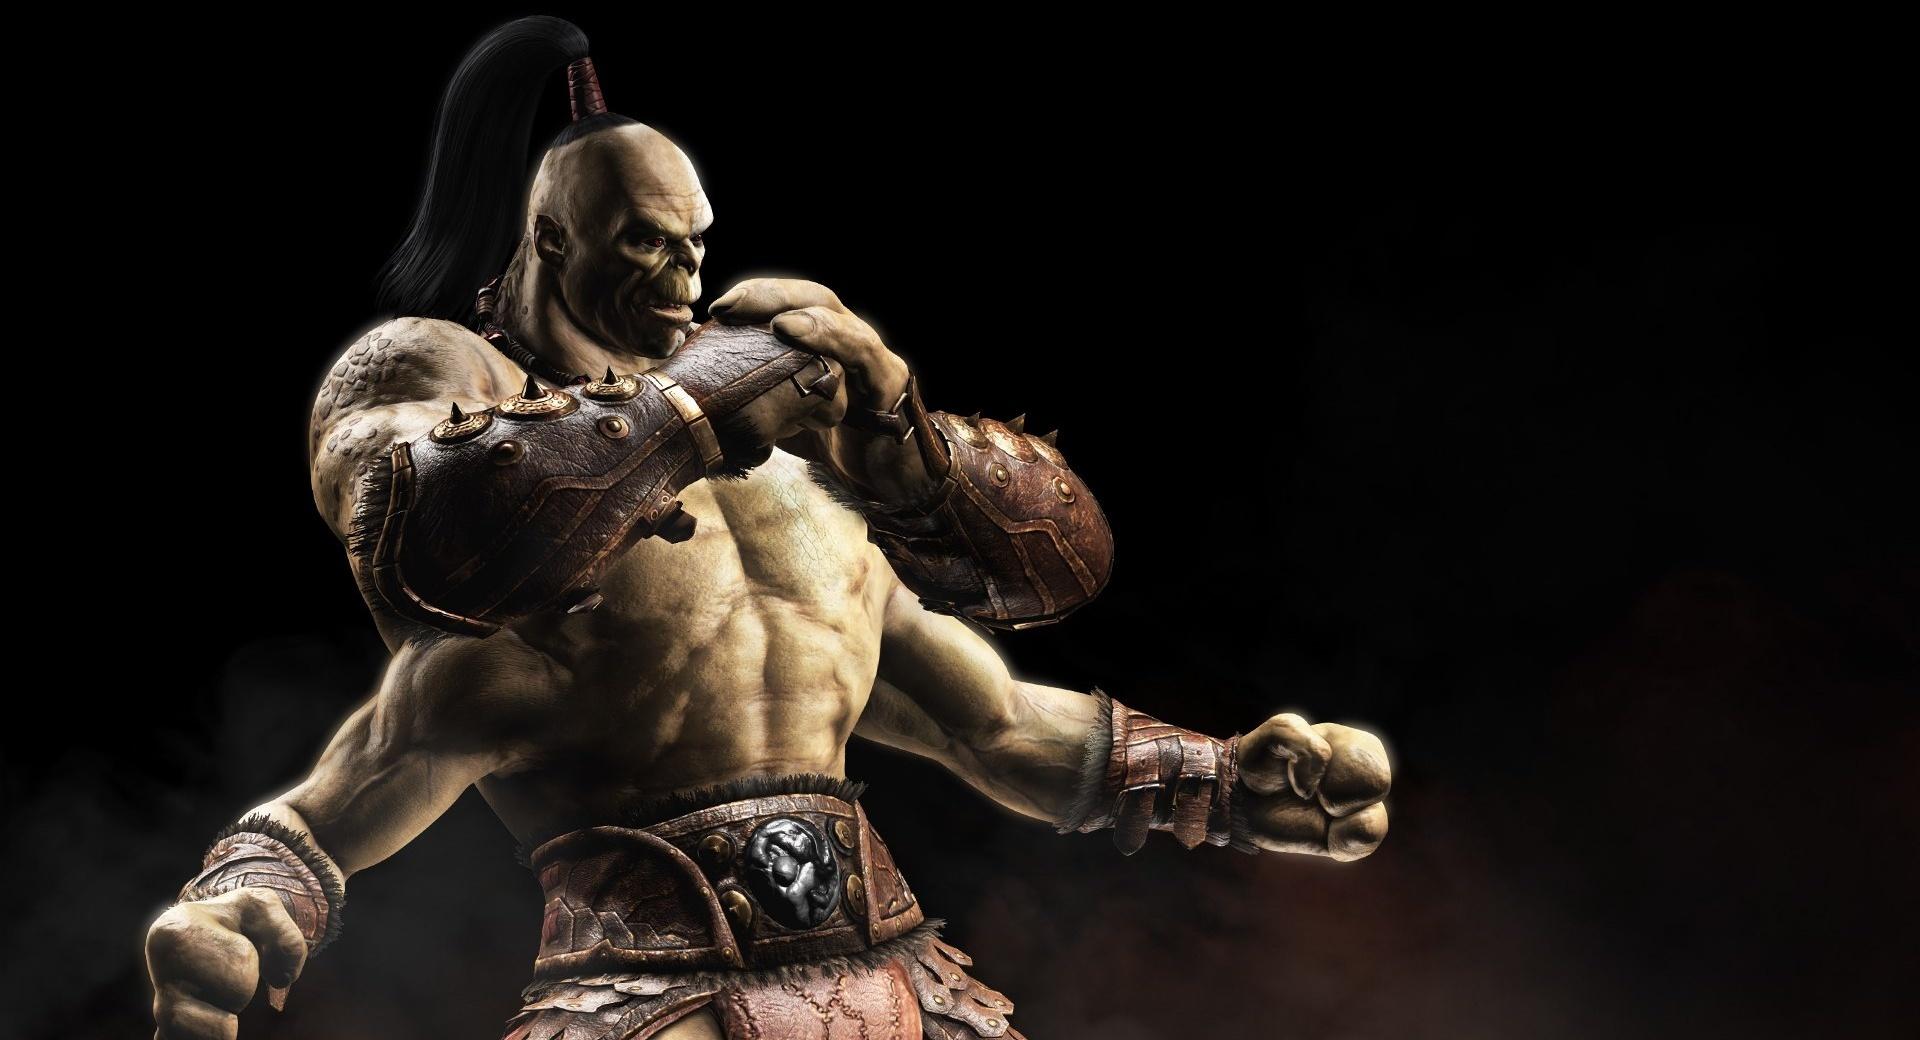 Goro - Mortal Kombat X at 1280 x 960 size wallpapers HD quality